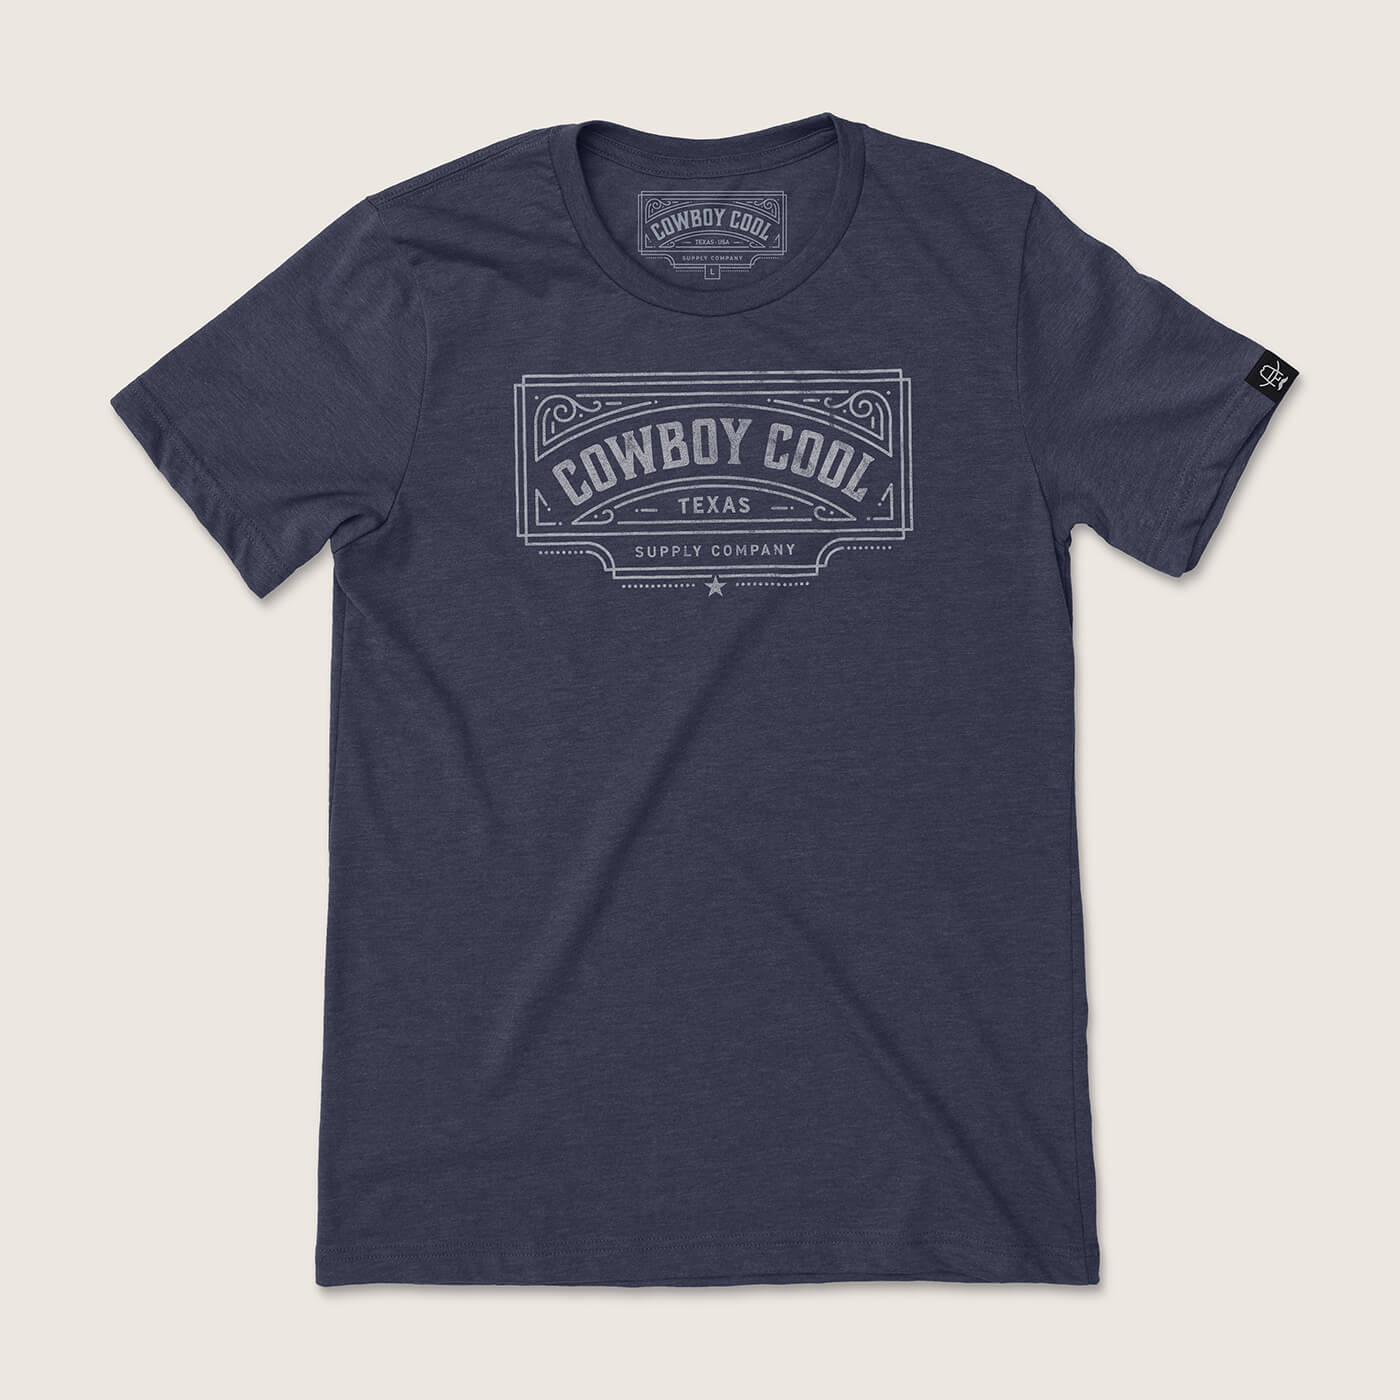 Cowboy Cool T-Shirt